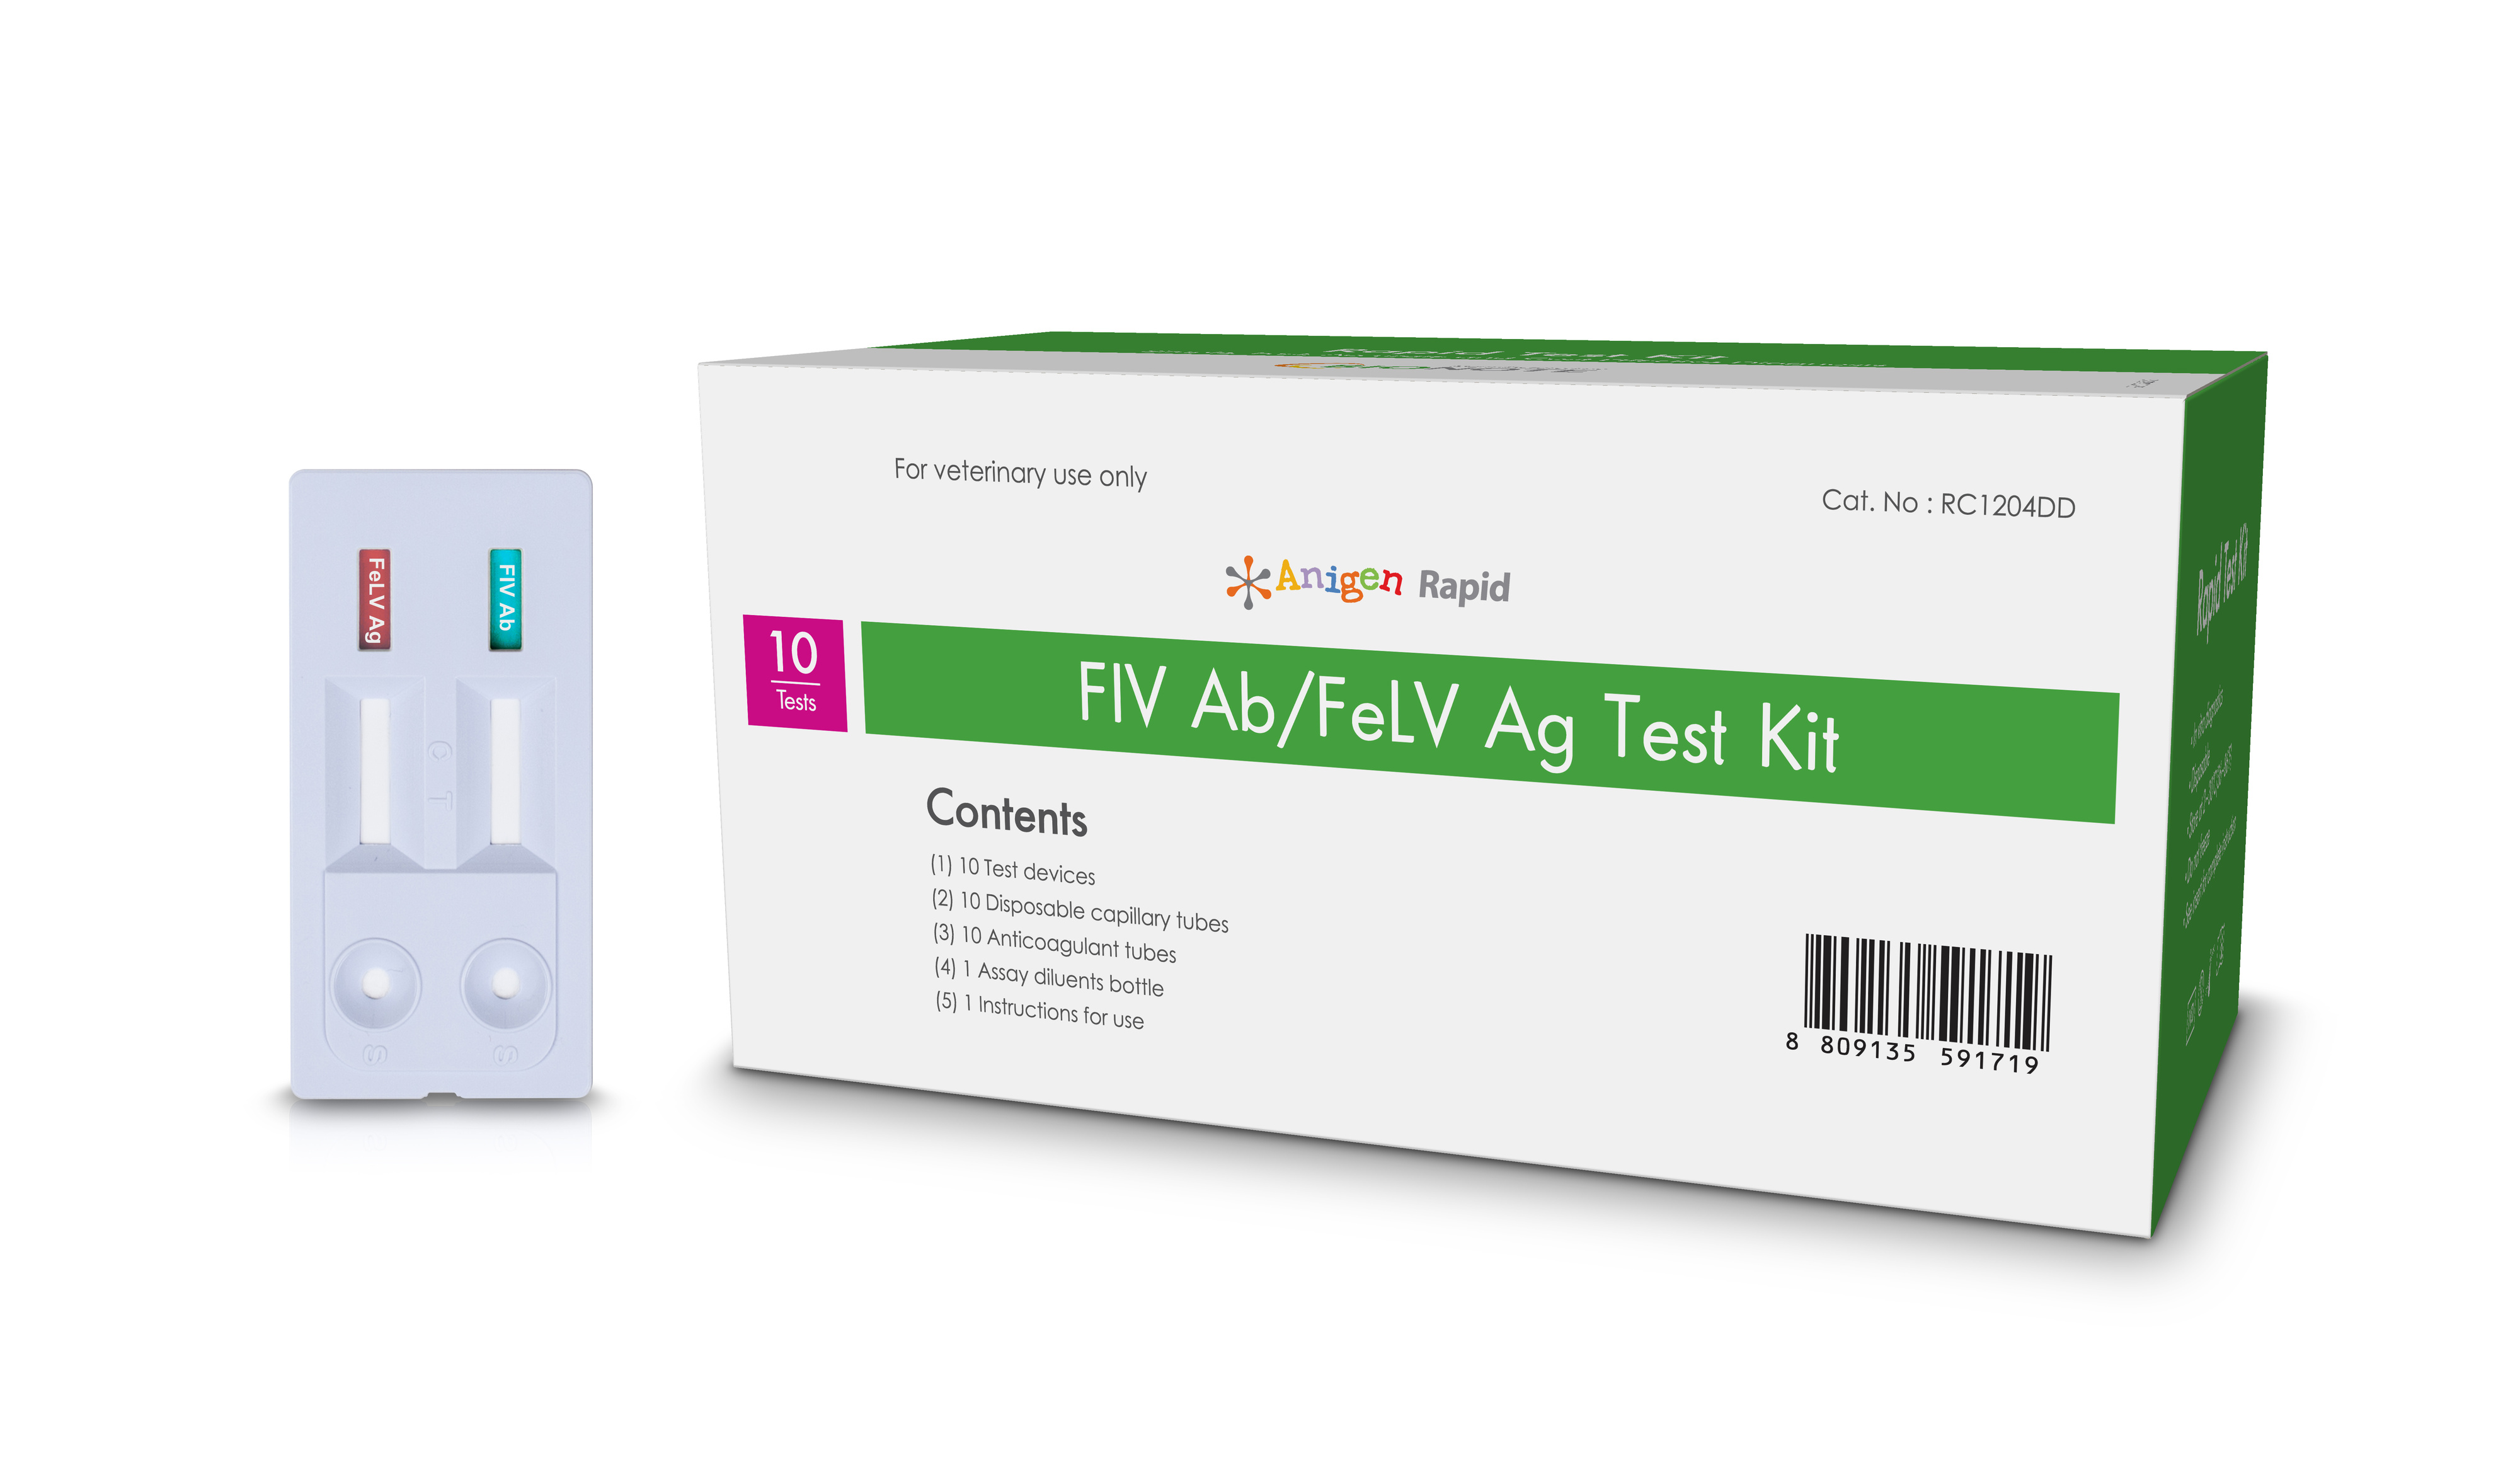 Snabbtest FIV Ab/FeLV Ag Test Kit